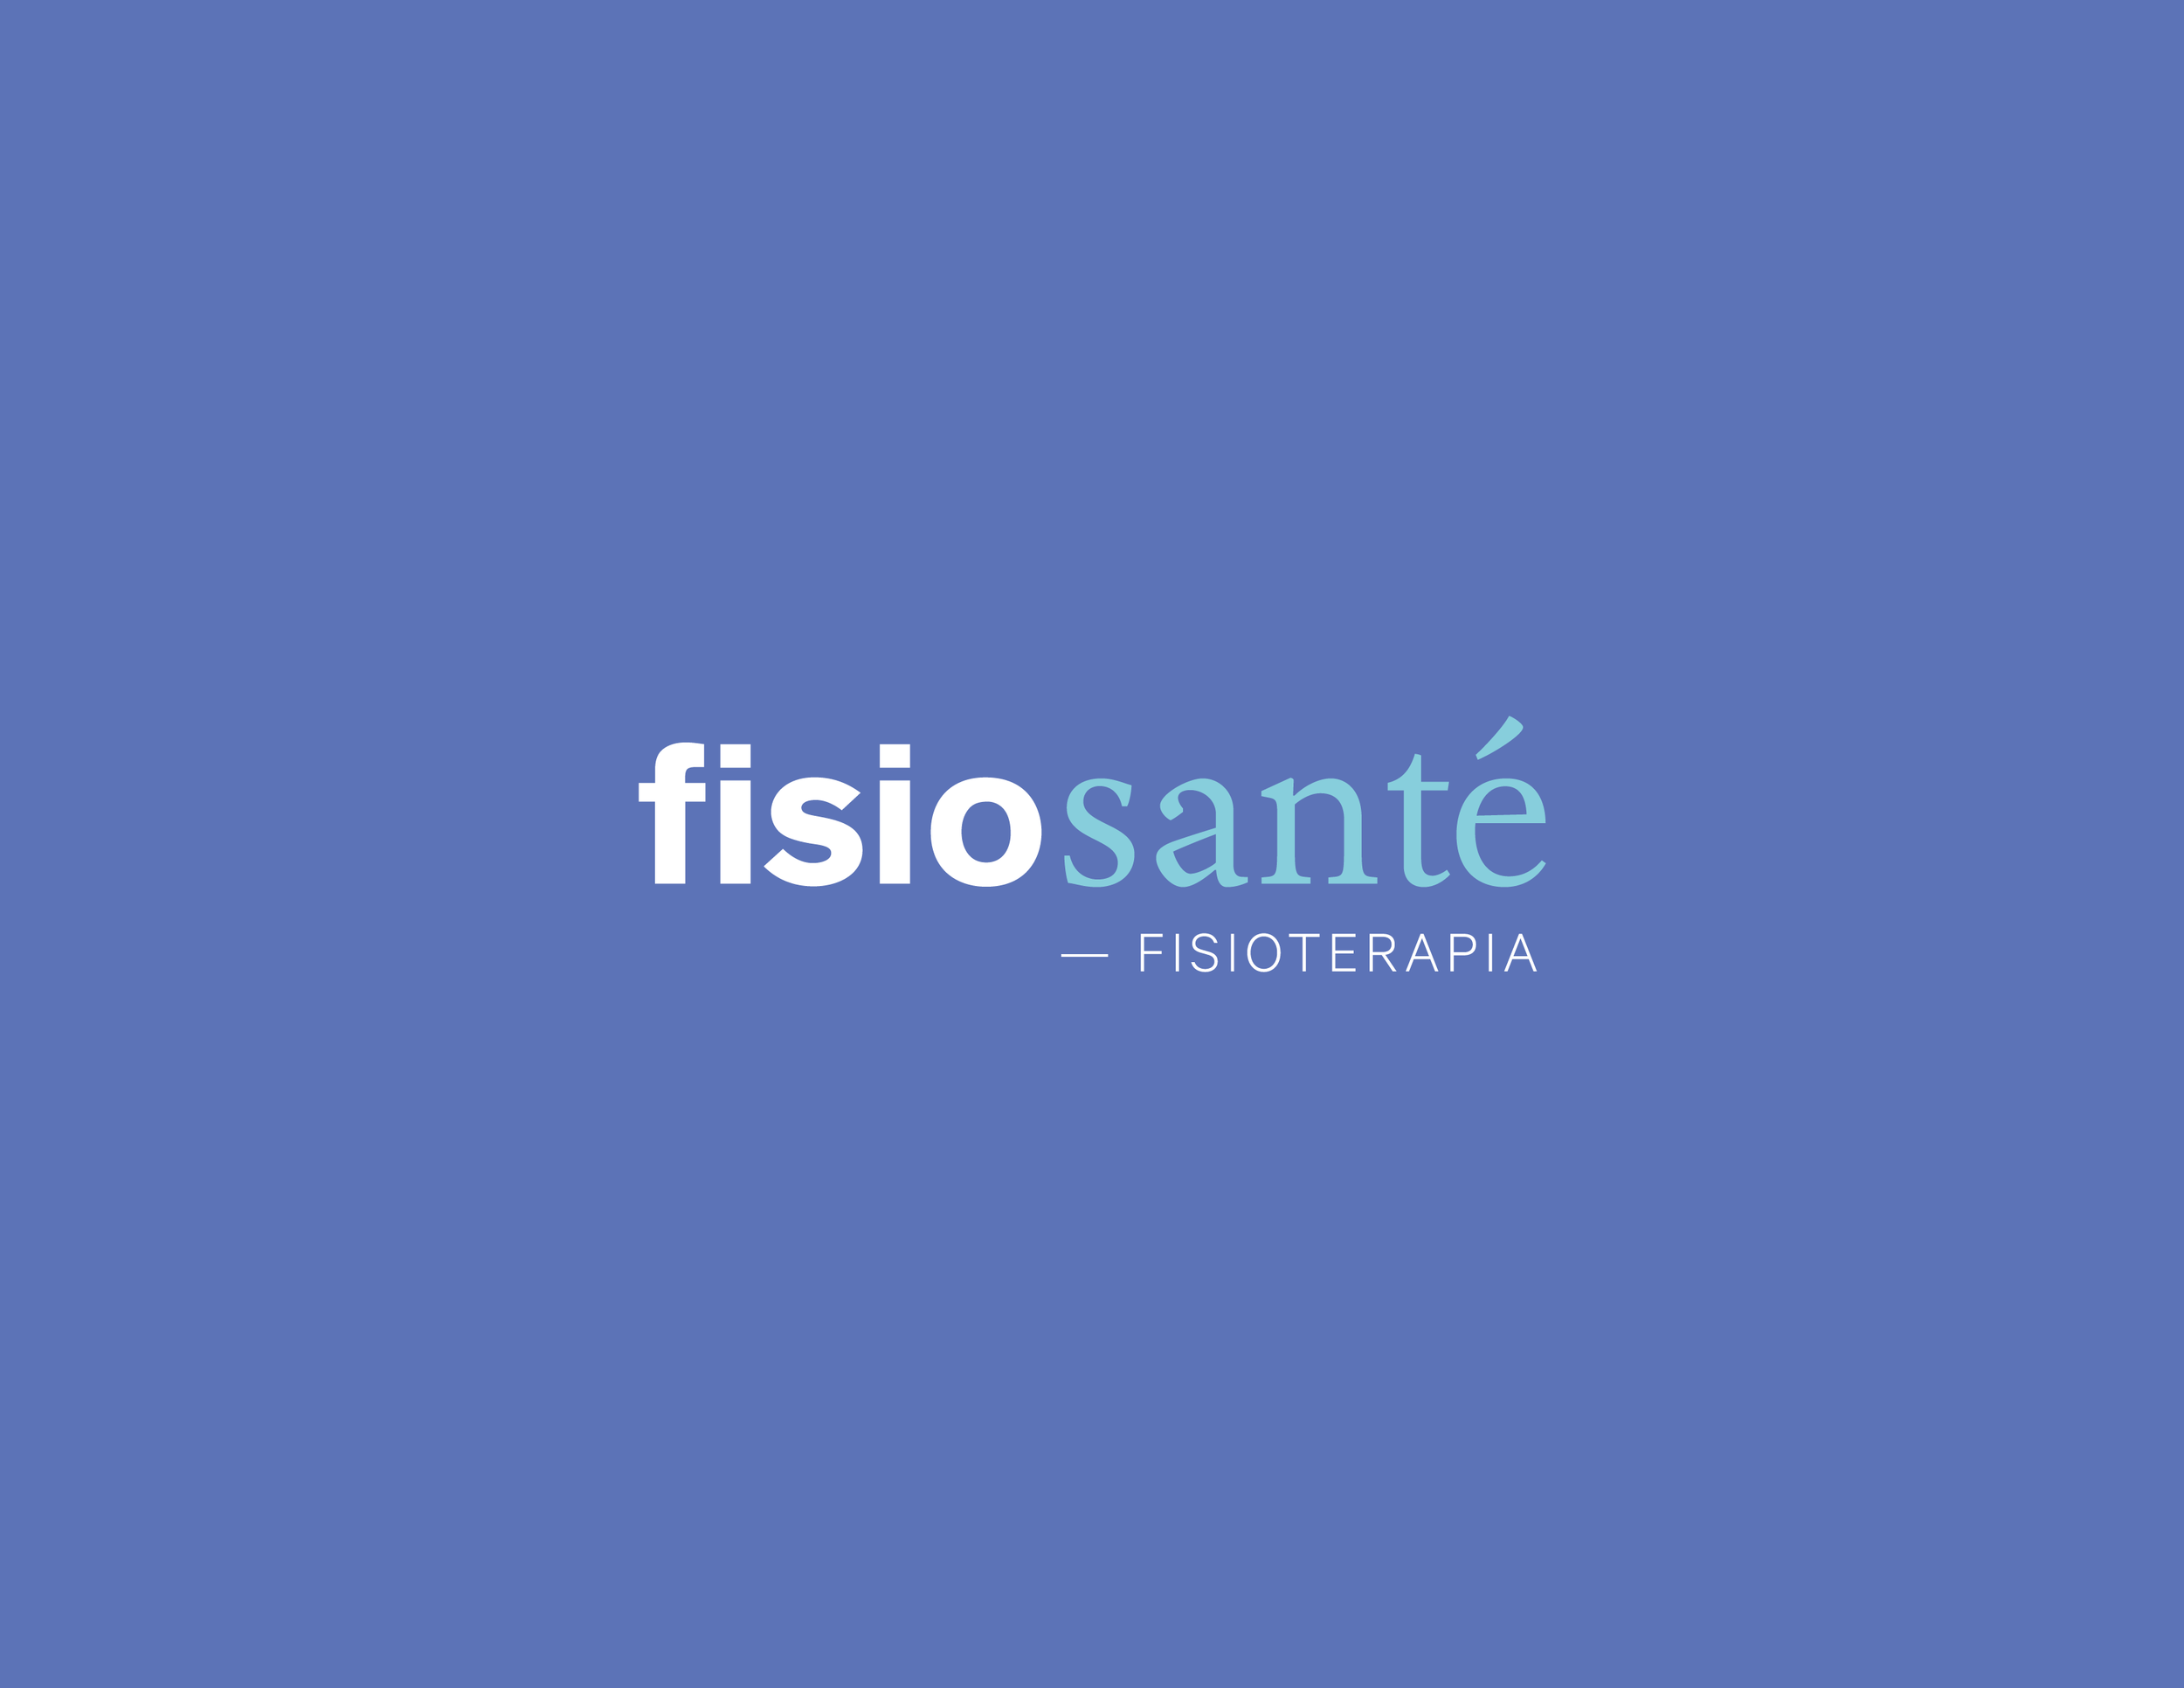 fisiosante-12.png